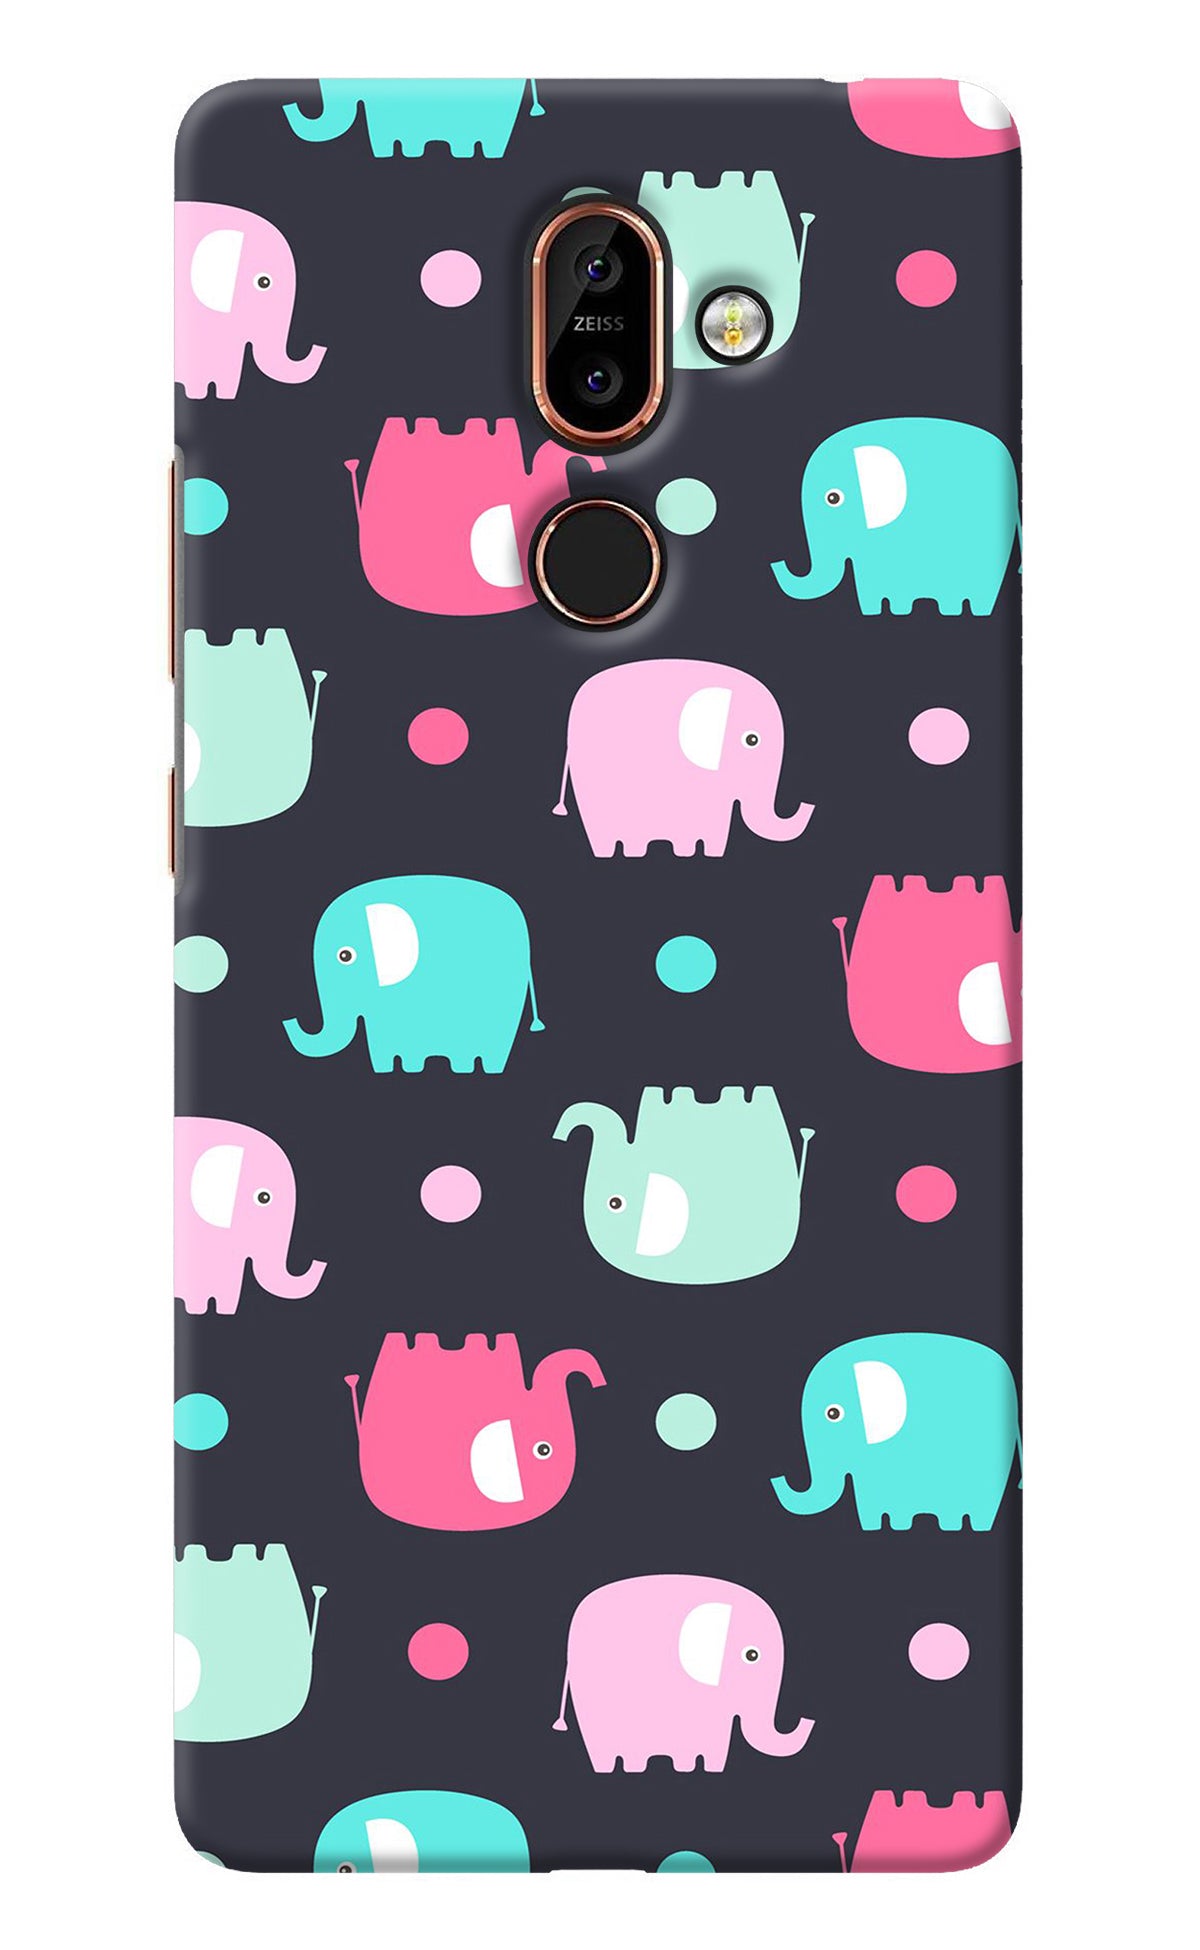 Elephants Nokia 7 Plus Back Cover